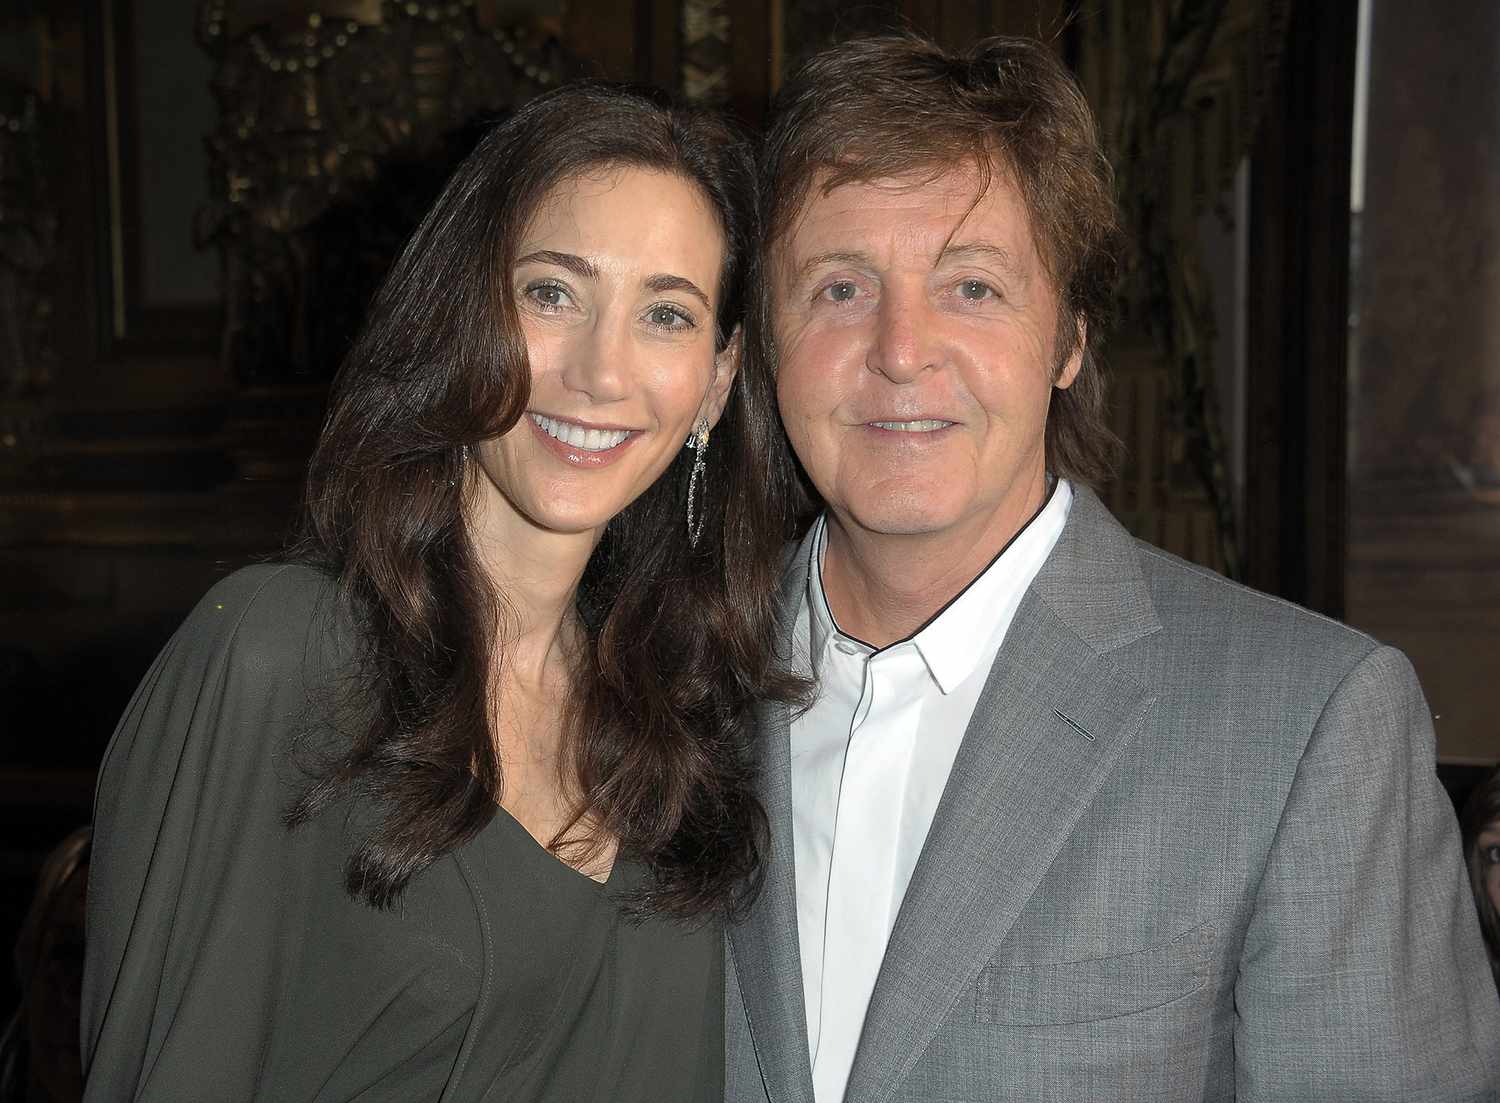 Paul McCartney는 아내 Nancy Shevell과 '로맨틱'합니다. '나는 완전히 발렌타인 데이를 과도하게합니다'